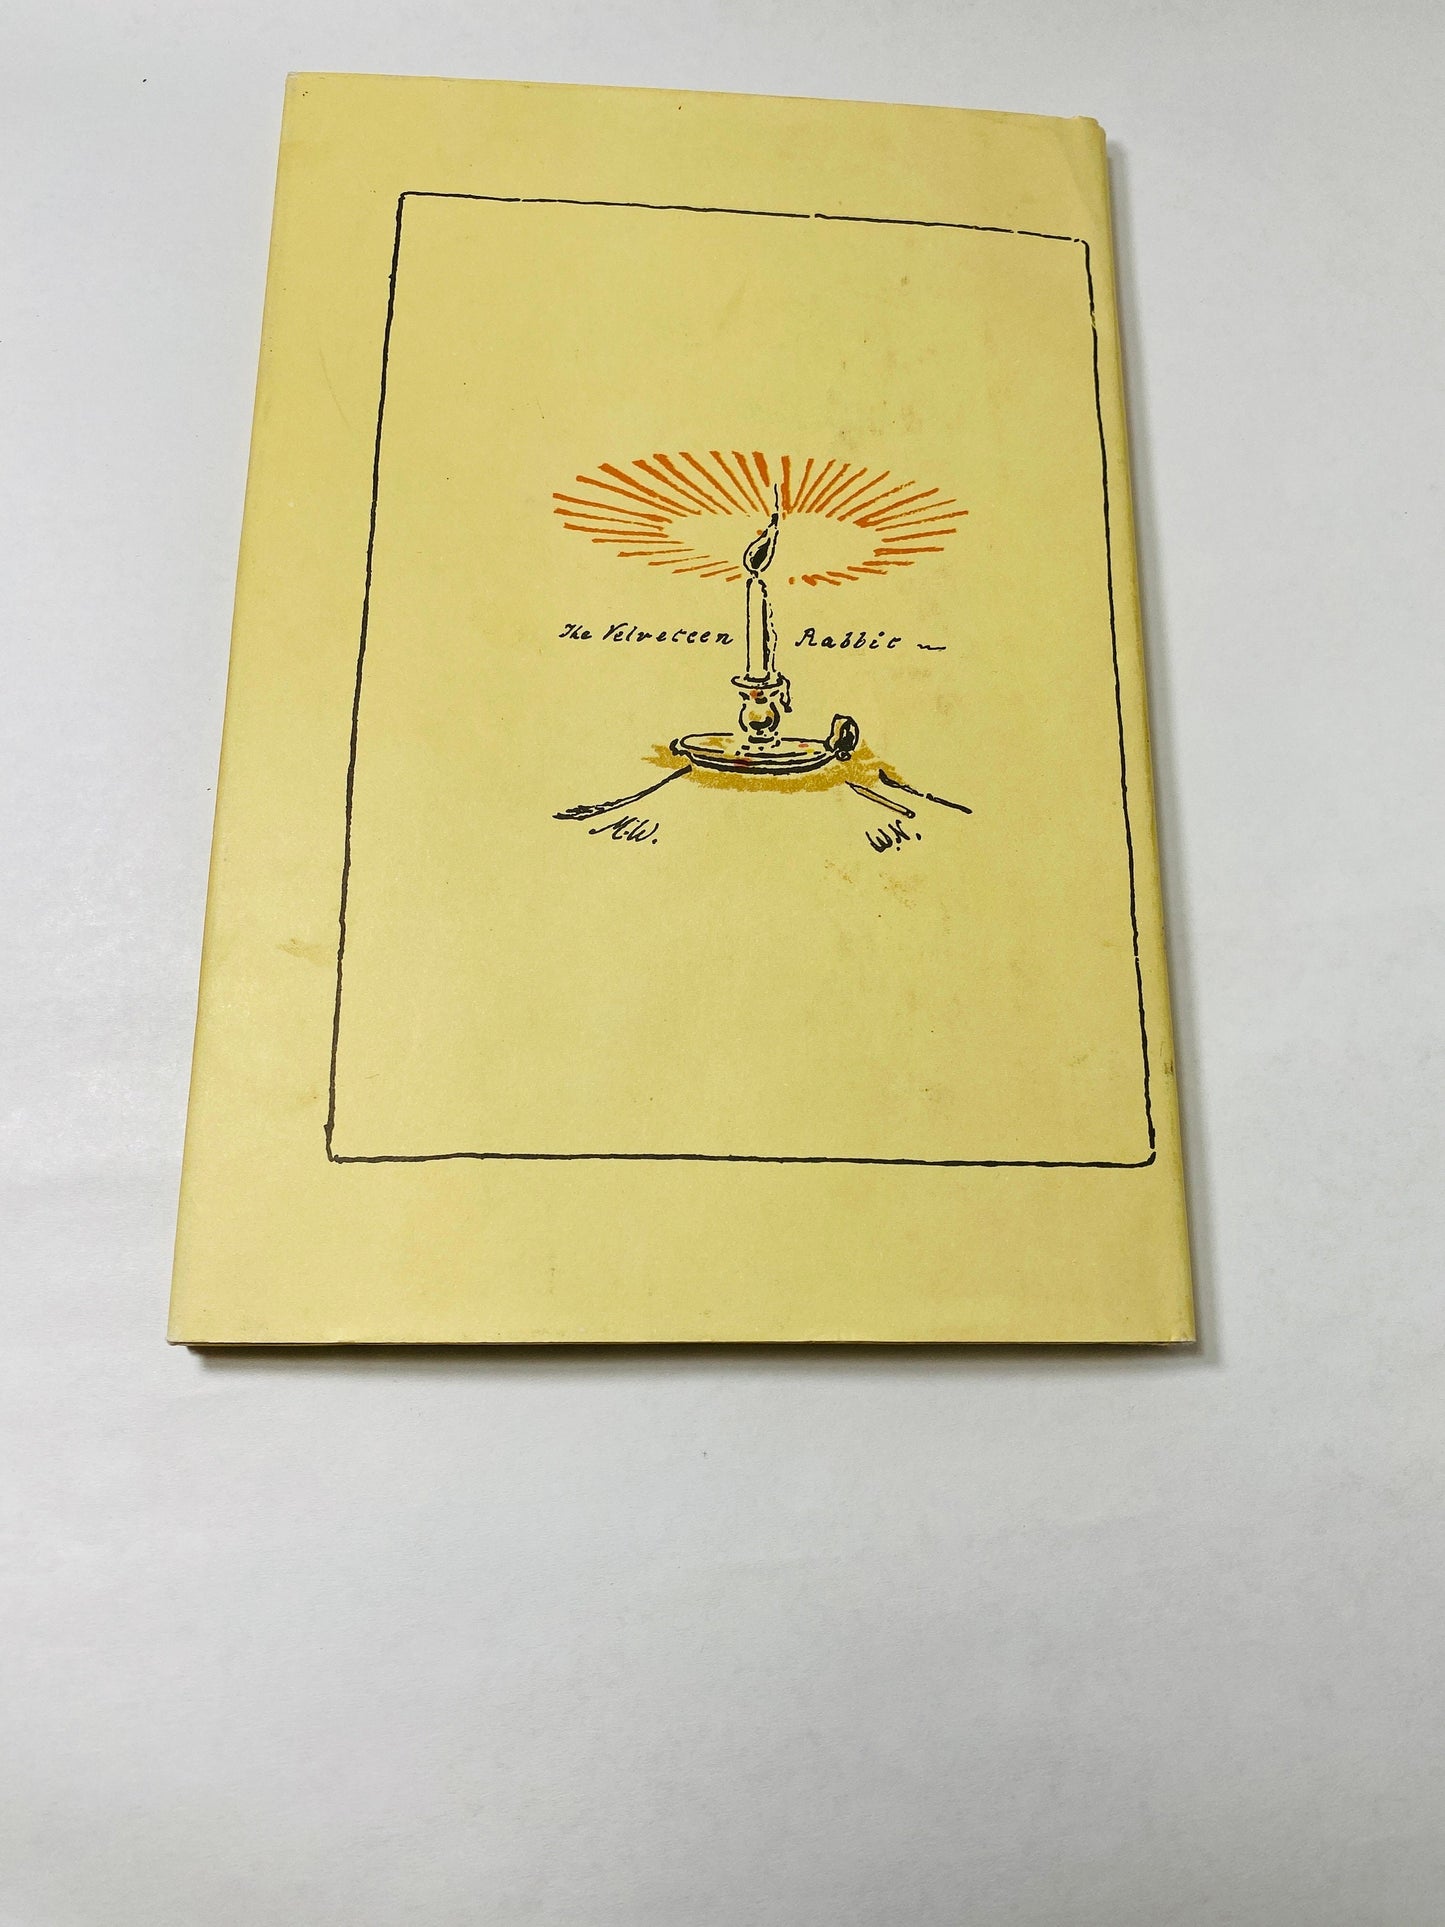 1982 Velveteen Rabbit vintage children's book by Margery Williams Nursery home bookshelf yellow decor elementary toddler school reading